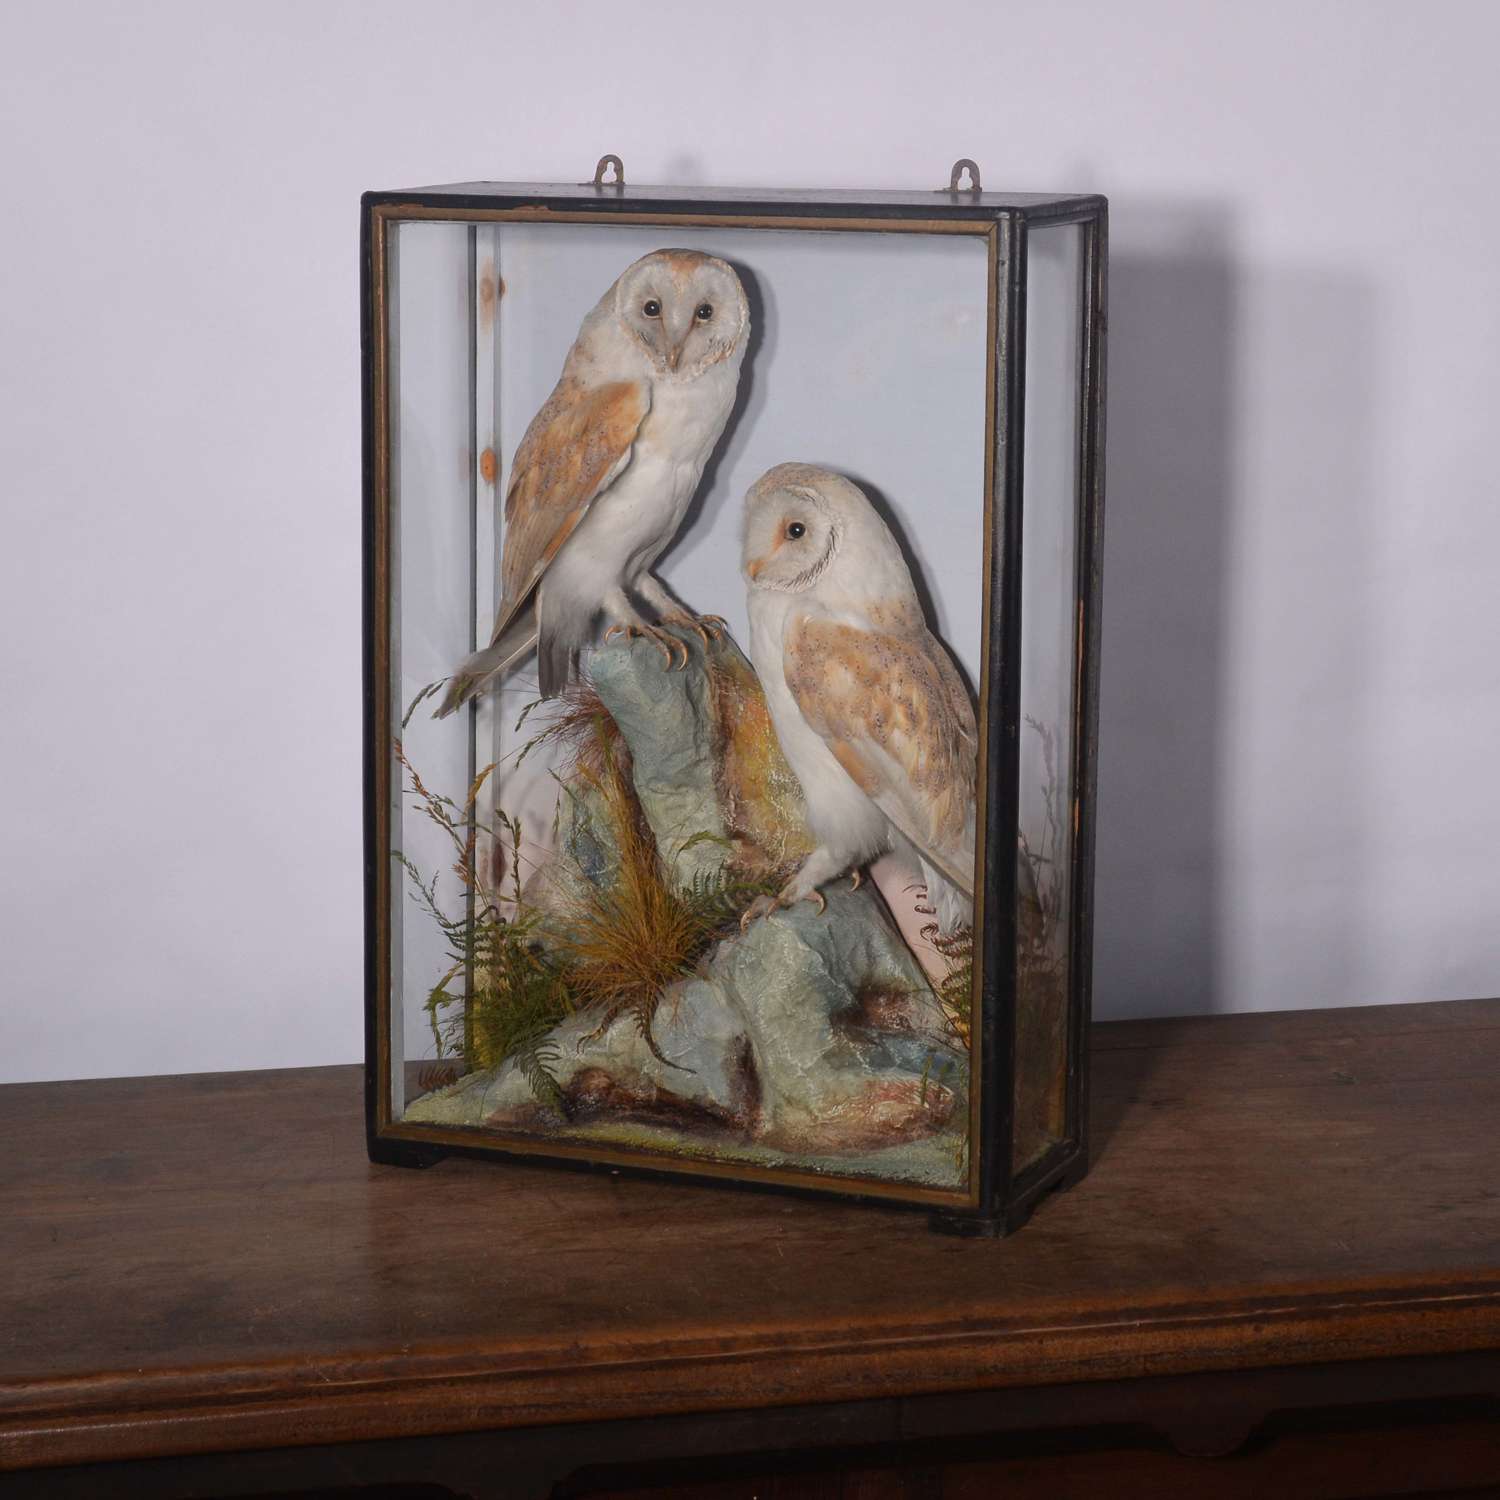 A cased pair of barn owls, Taxidermy